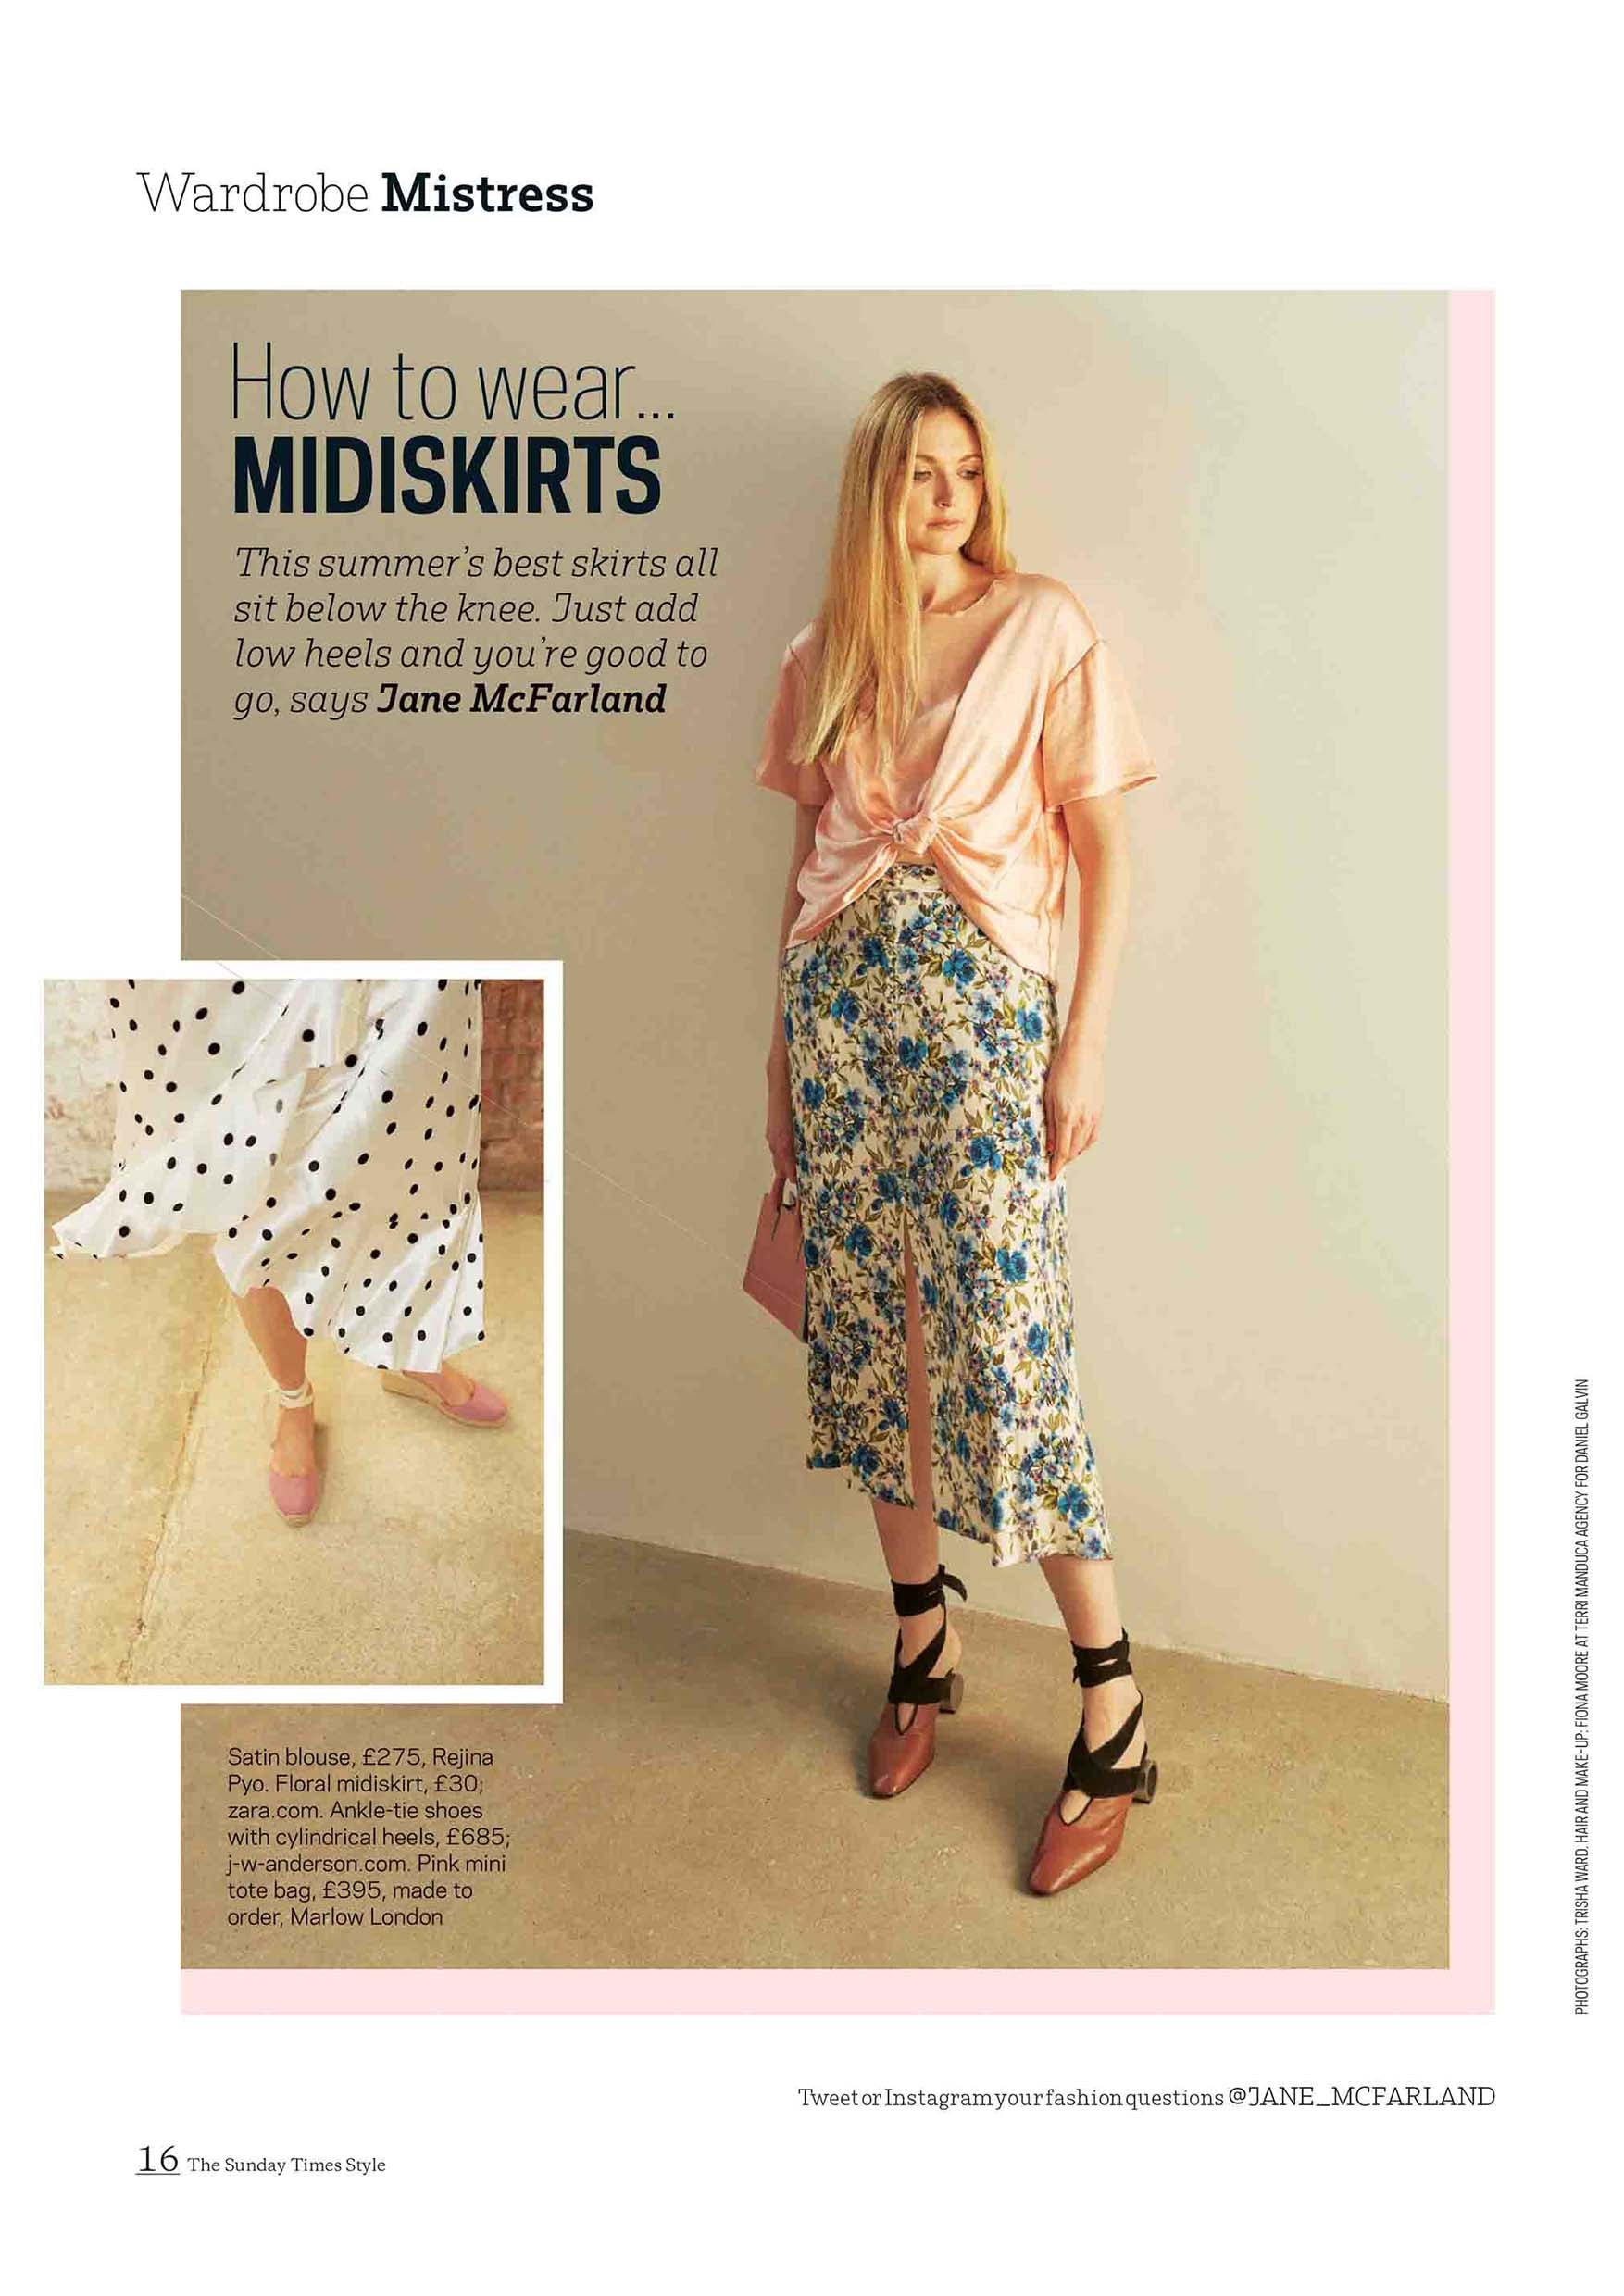 The Sunday Times Style Magazine Pink Mini Tote